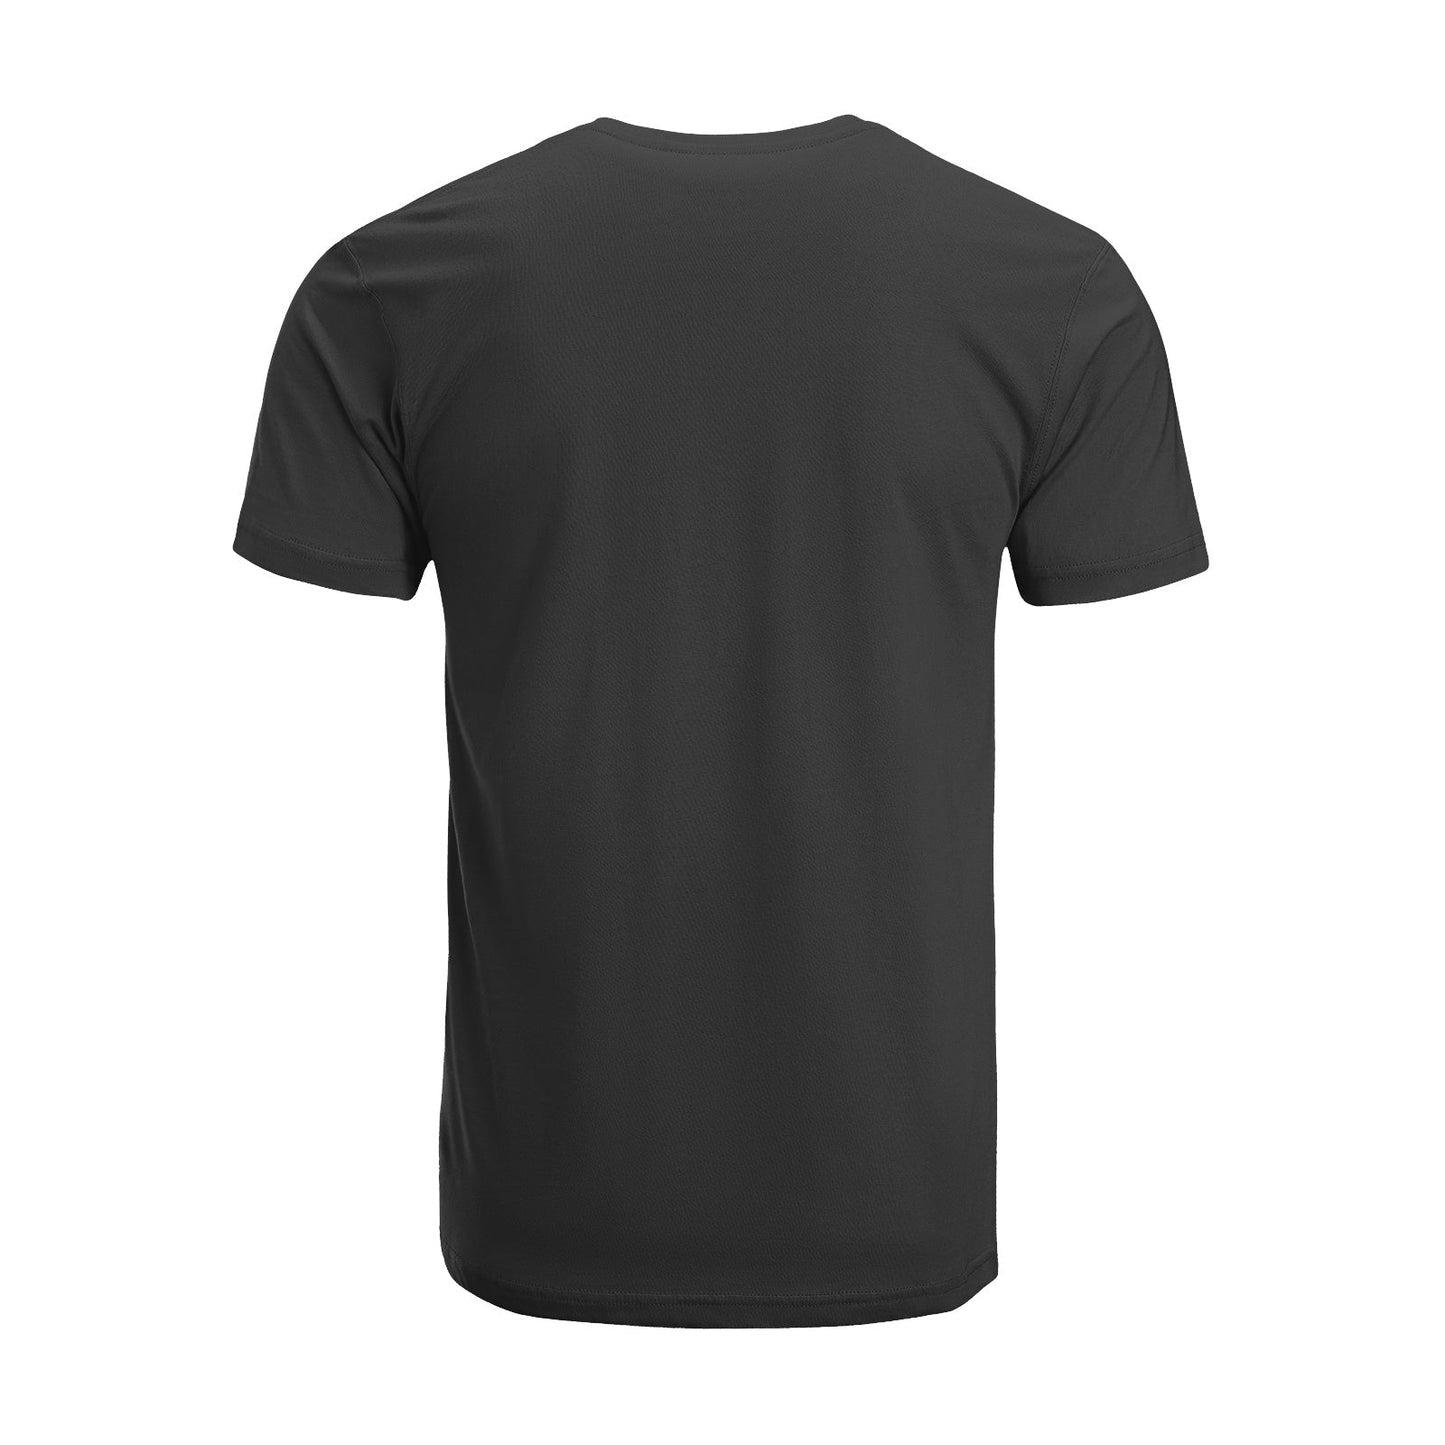 Unisex Short Sleeve Crew Neck Cotton Jersey T-Shirt MOM 10